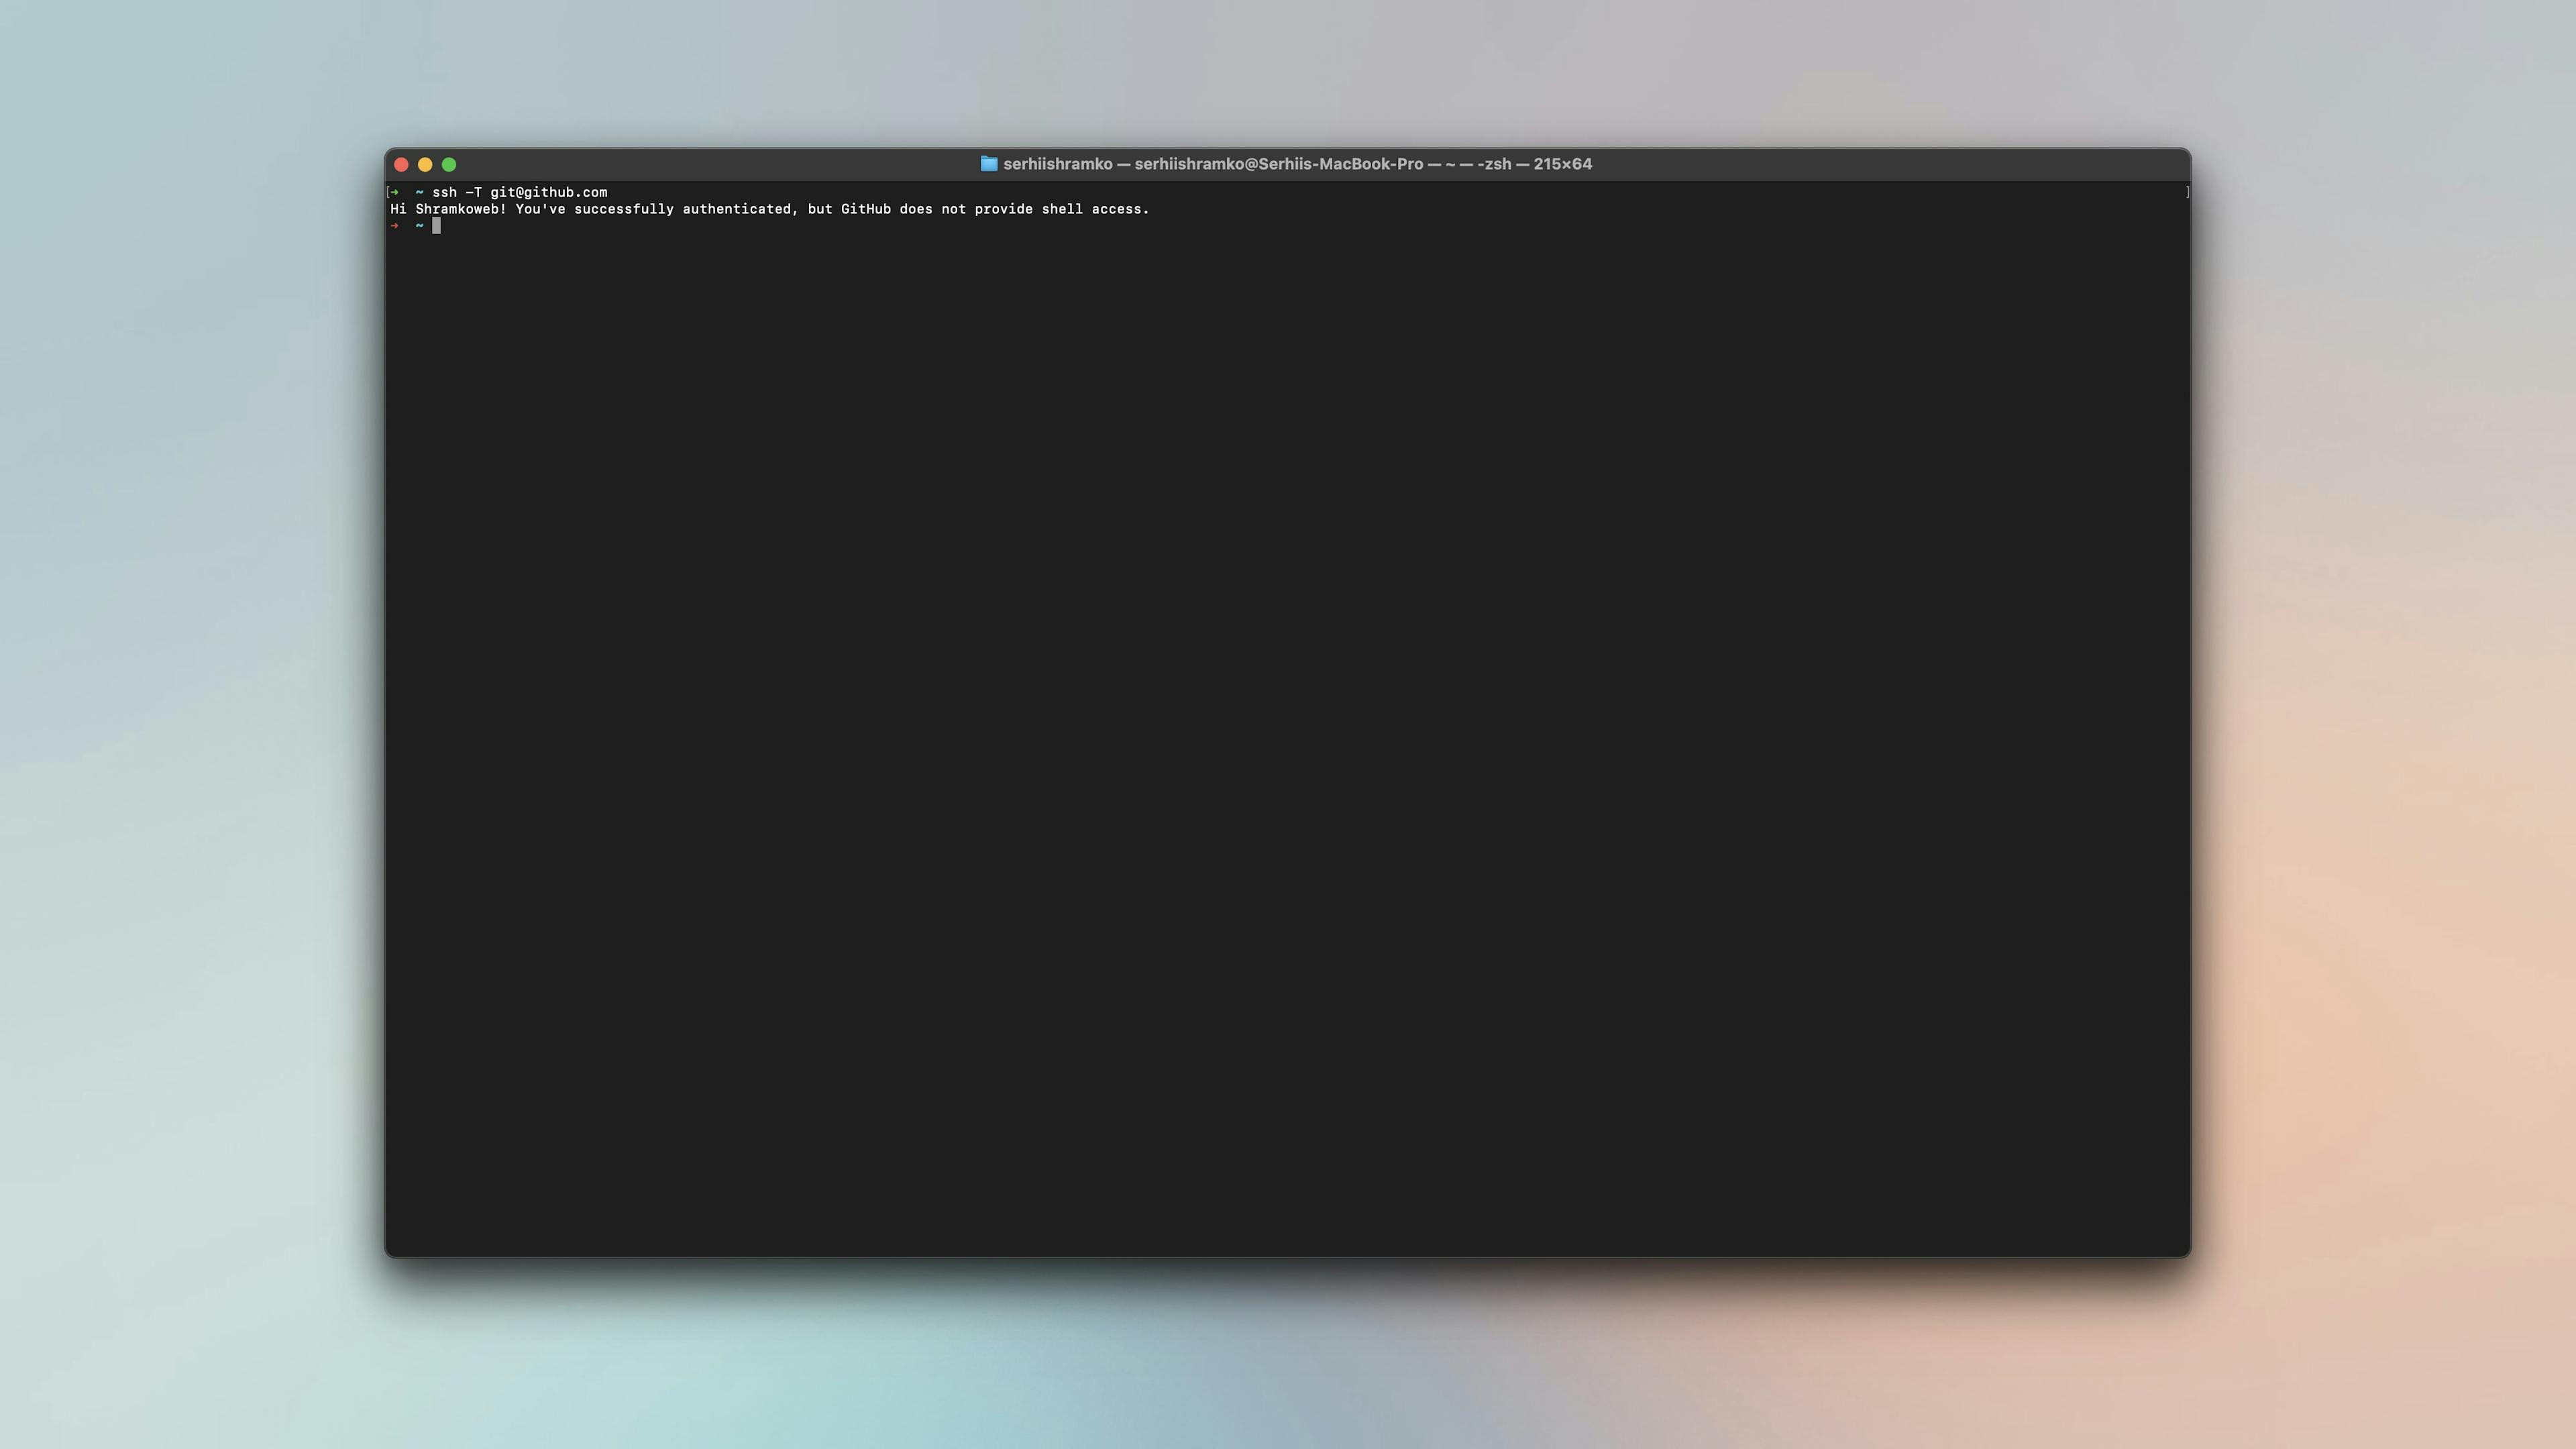 terminal with ssh folder